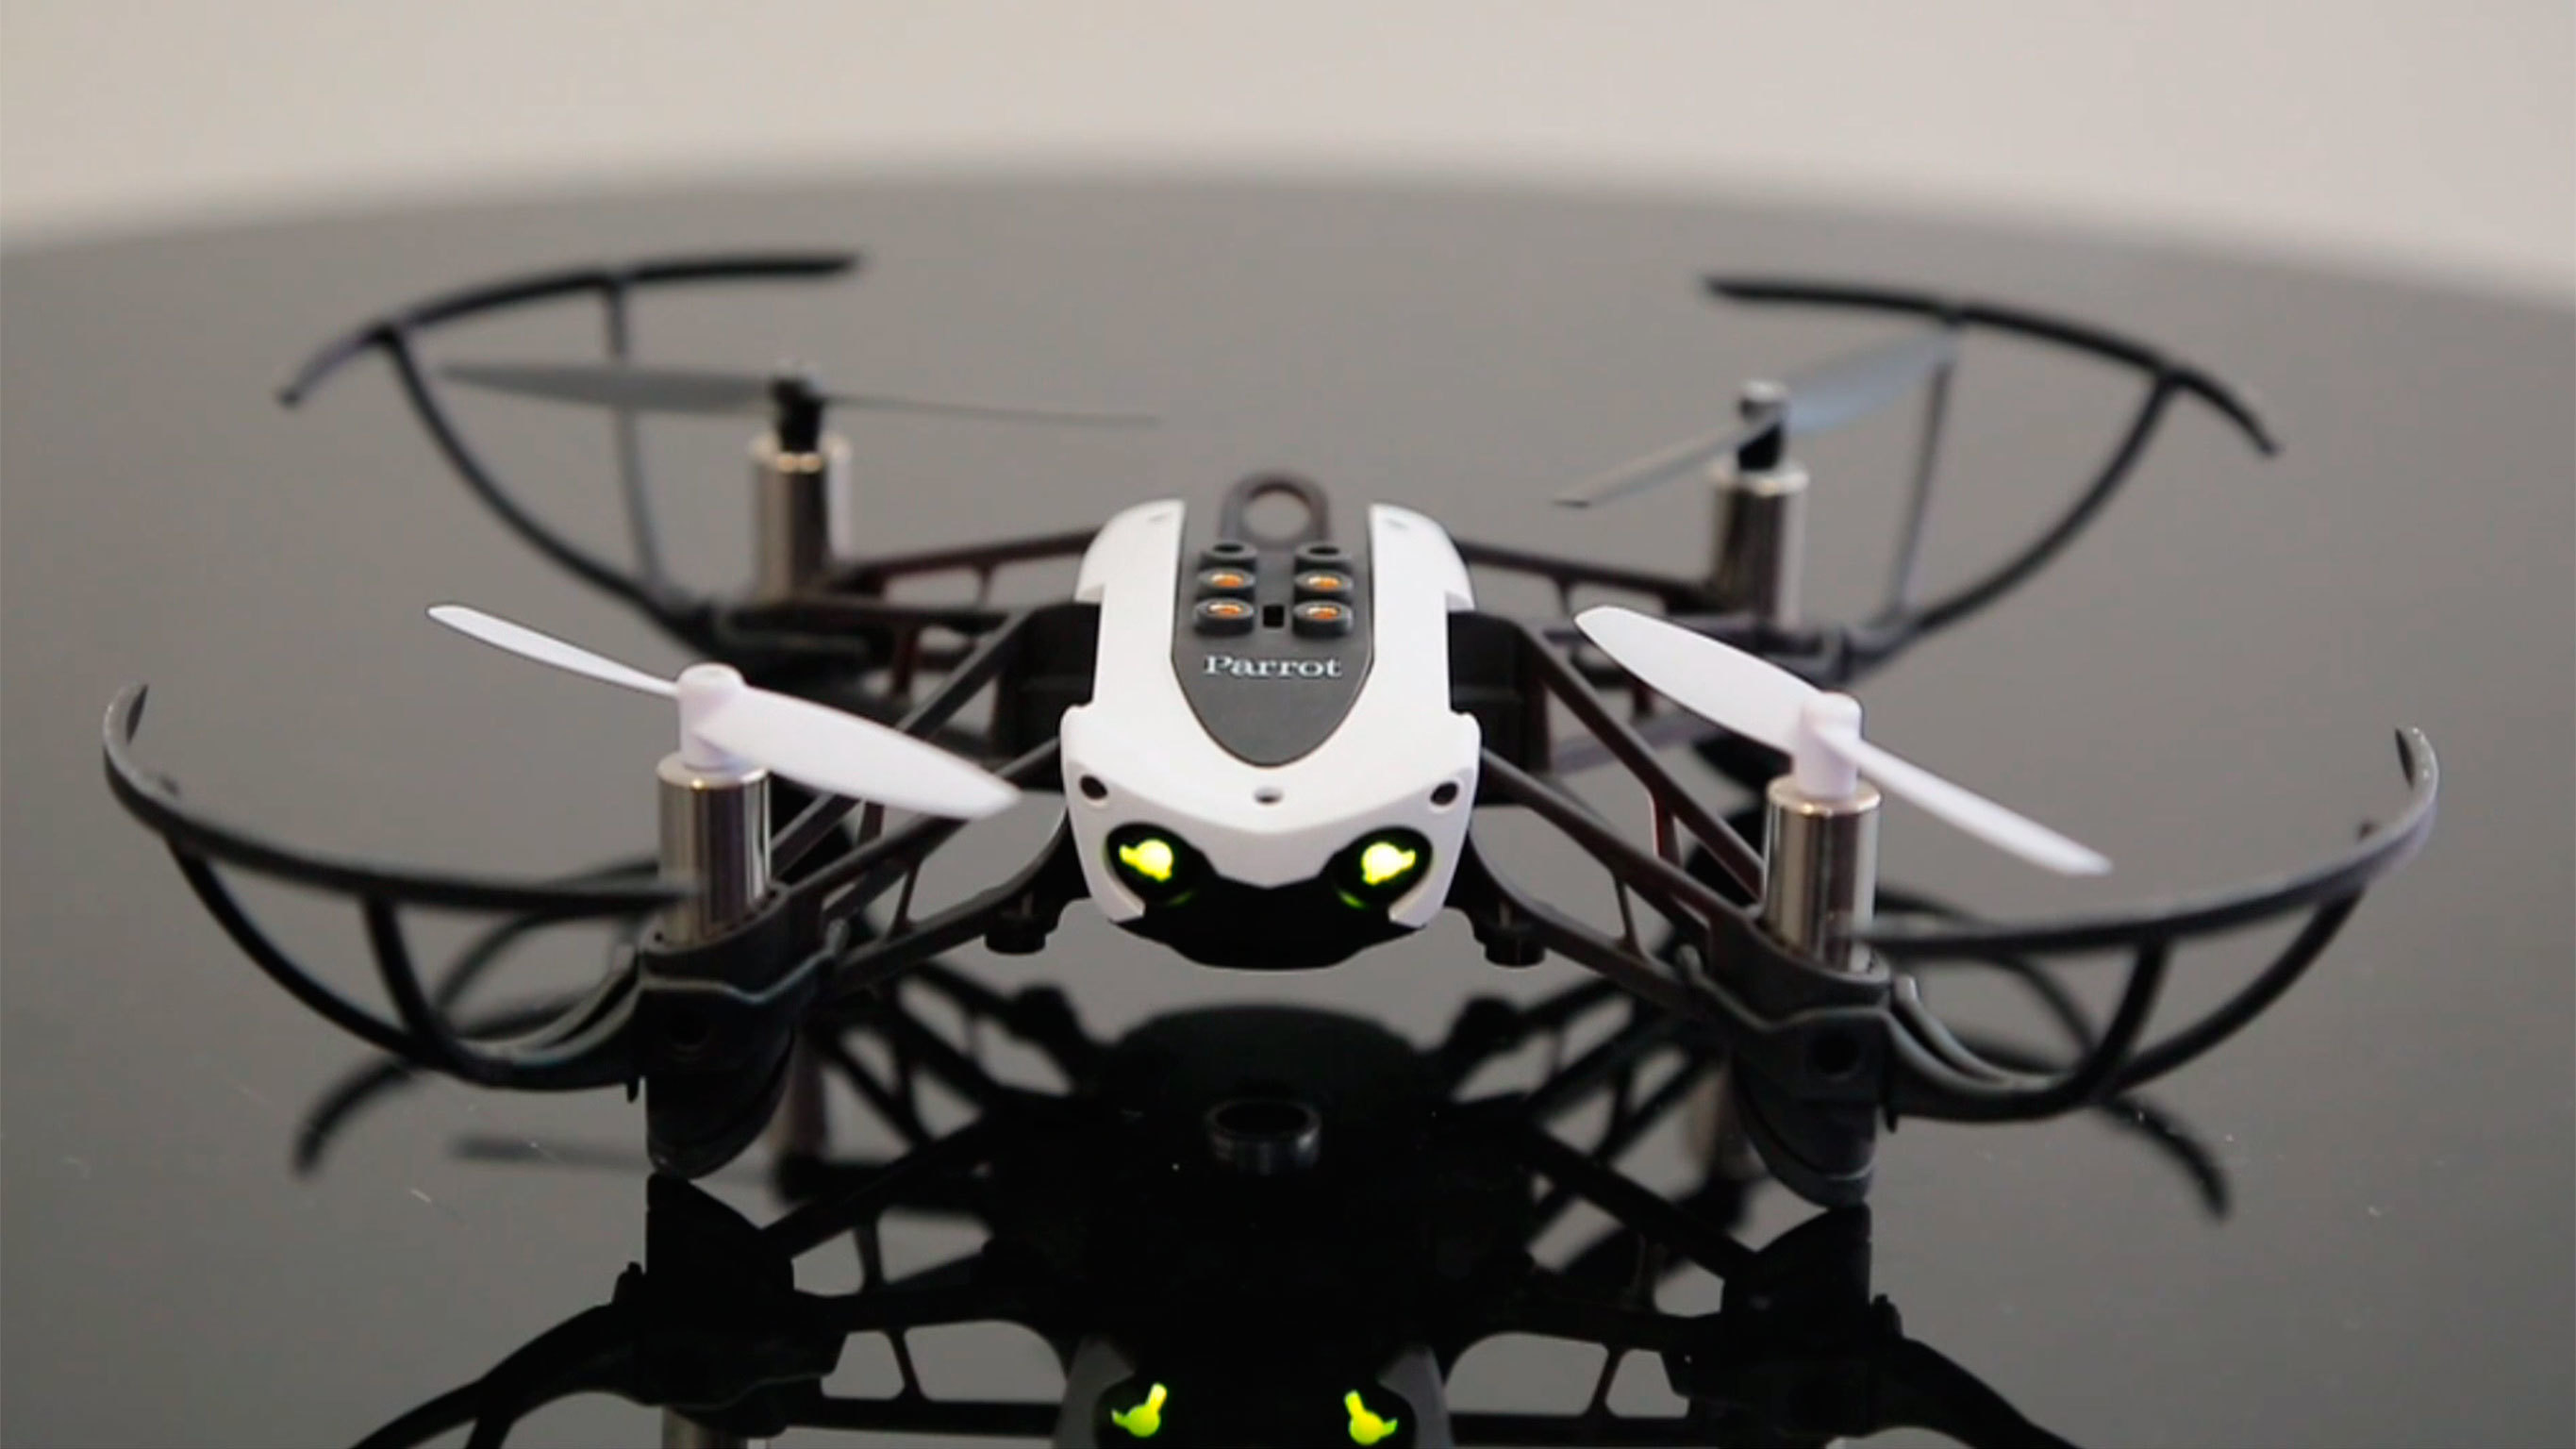 2016 Programa 94 - Un dron volador que lanza bolas de plástico